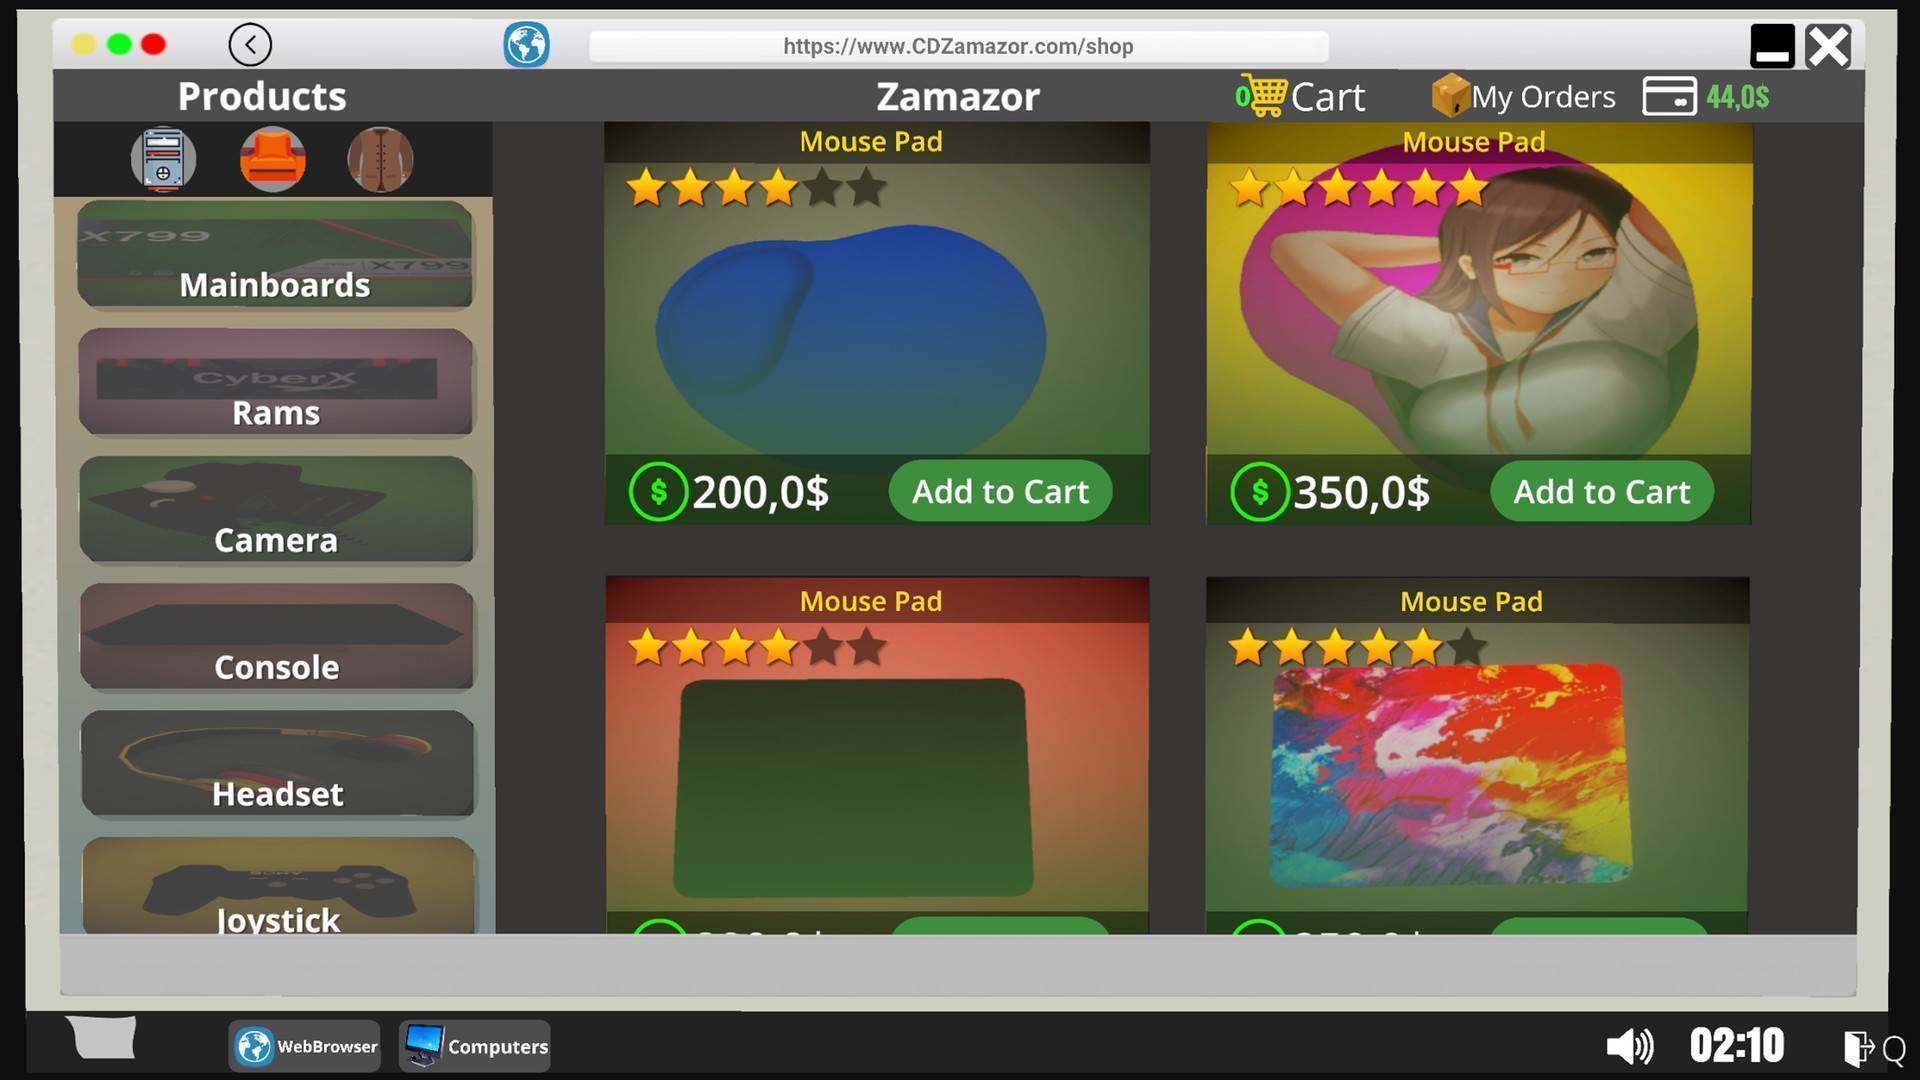 Buy Streamer Life Simulator (PC) - Steam - Digital Code